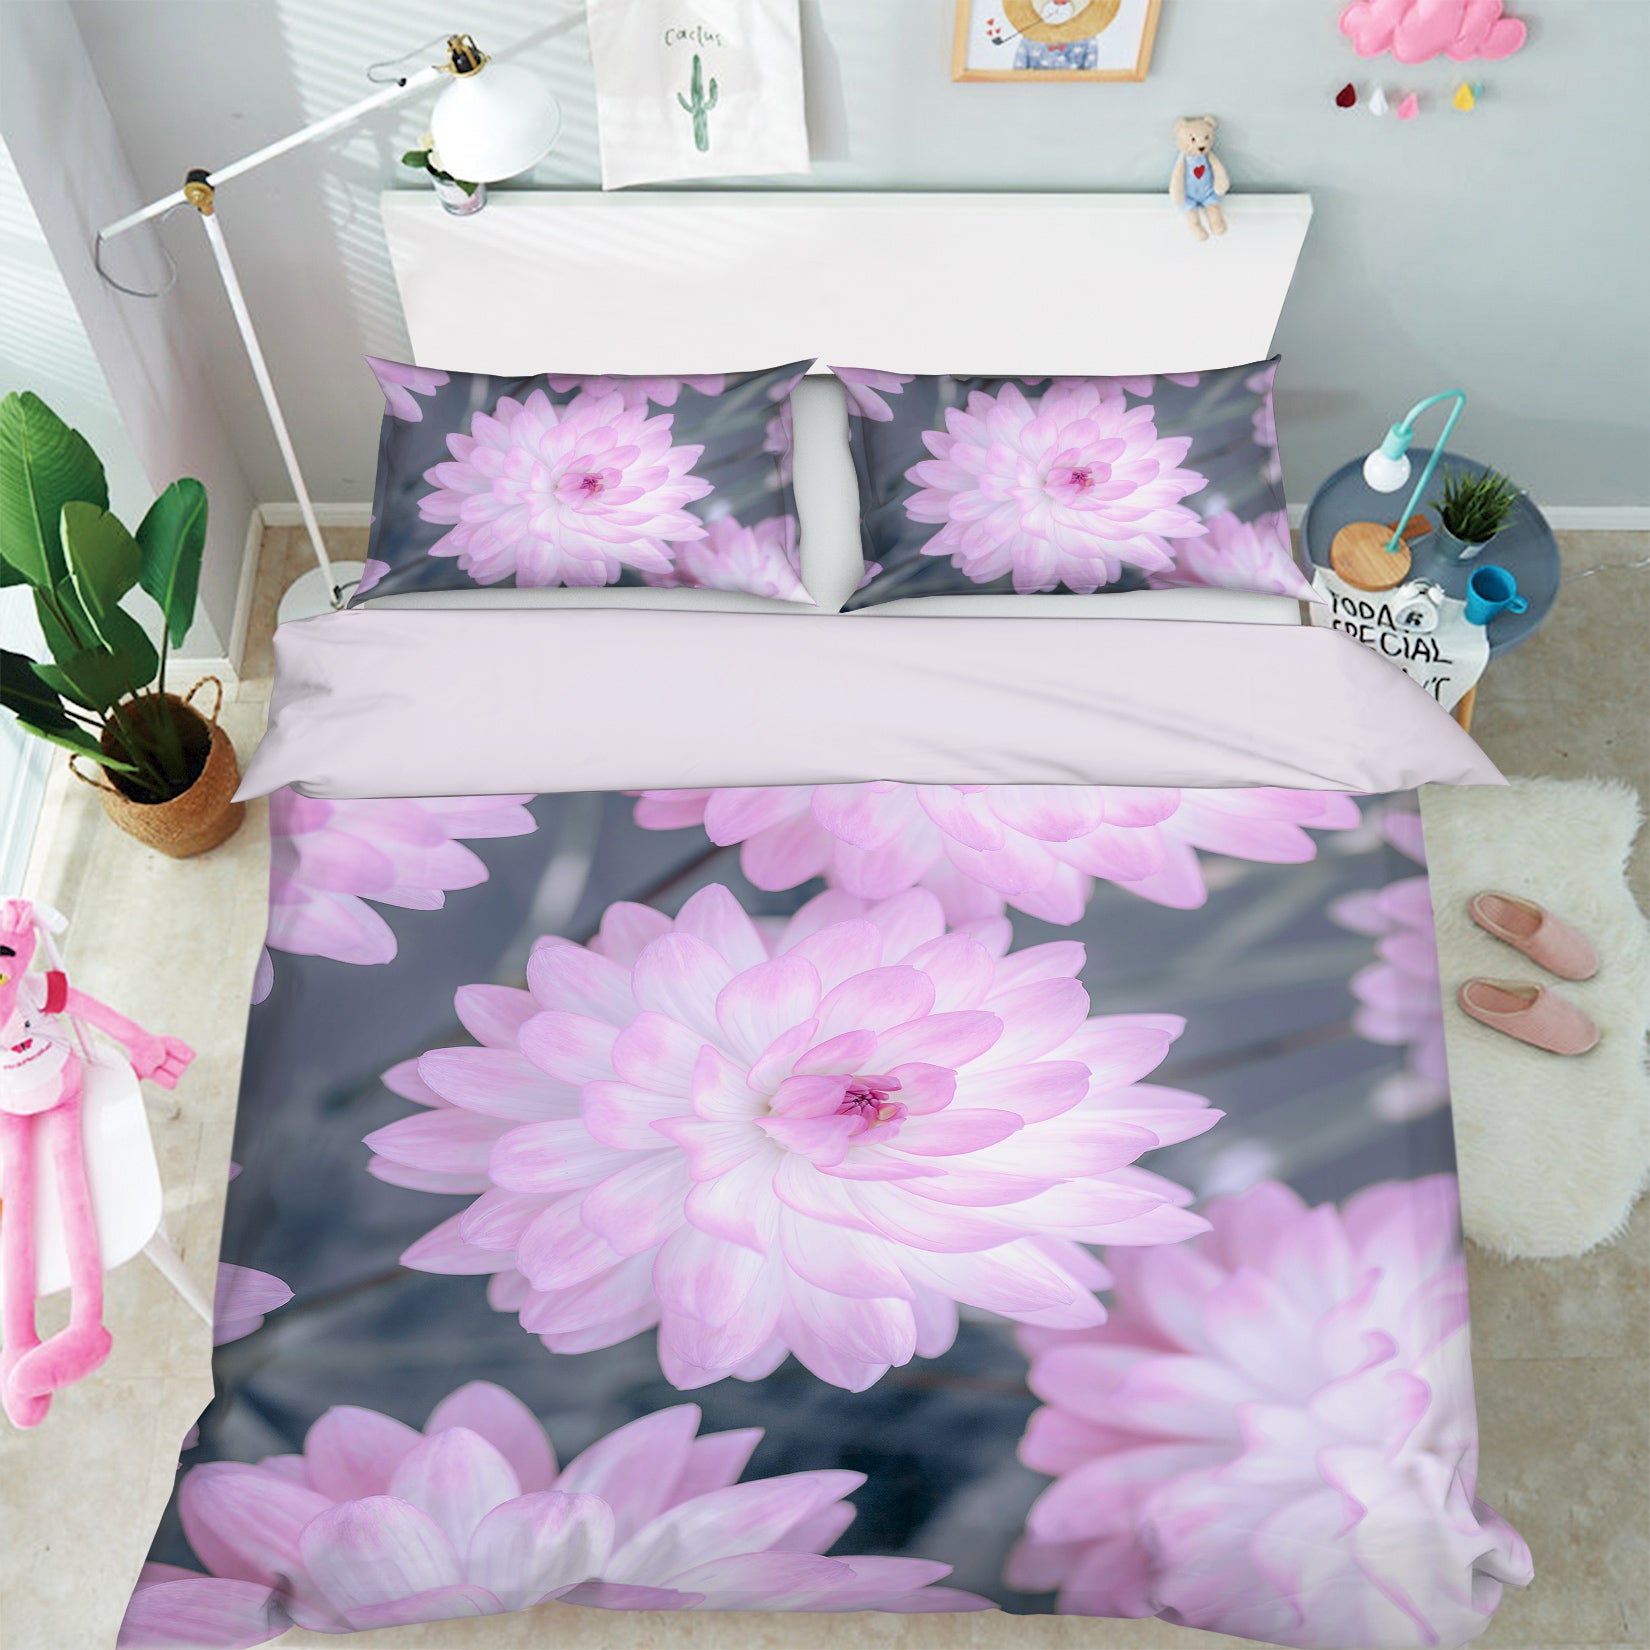 3D Pink Flower 6910 Assaf Frank Bedding Bed Pillowcases Quilt Cover Duvet Cover